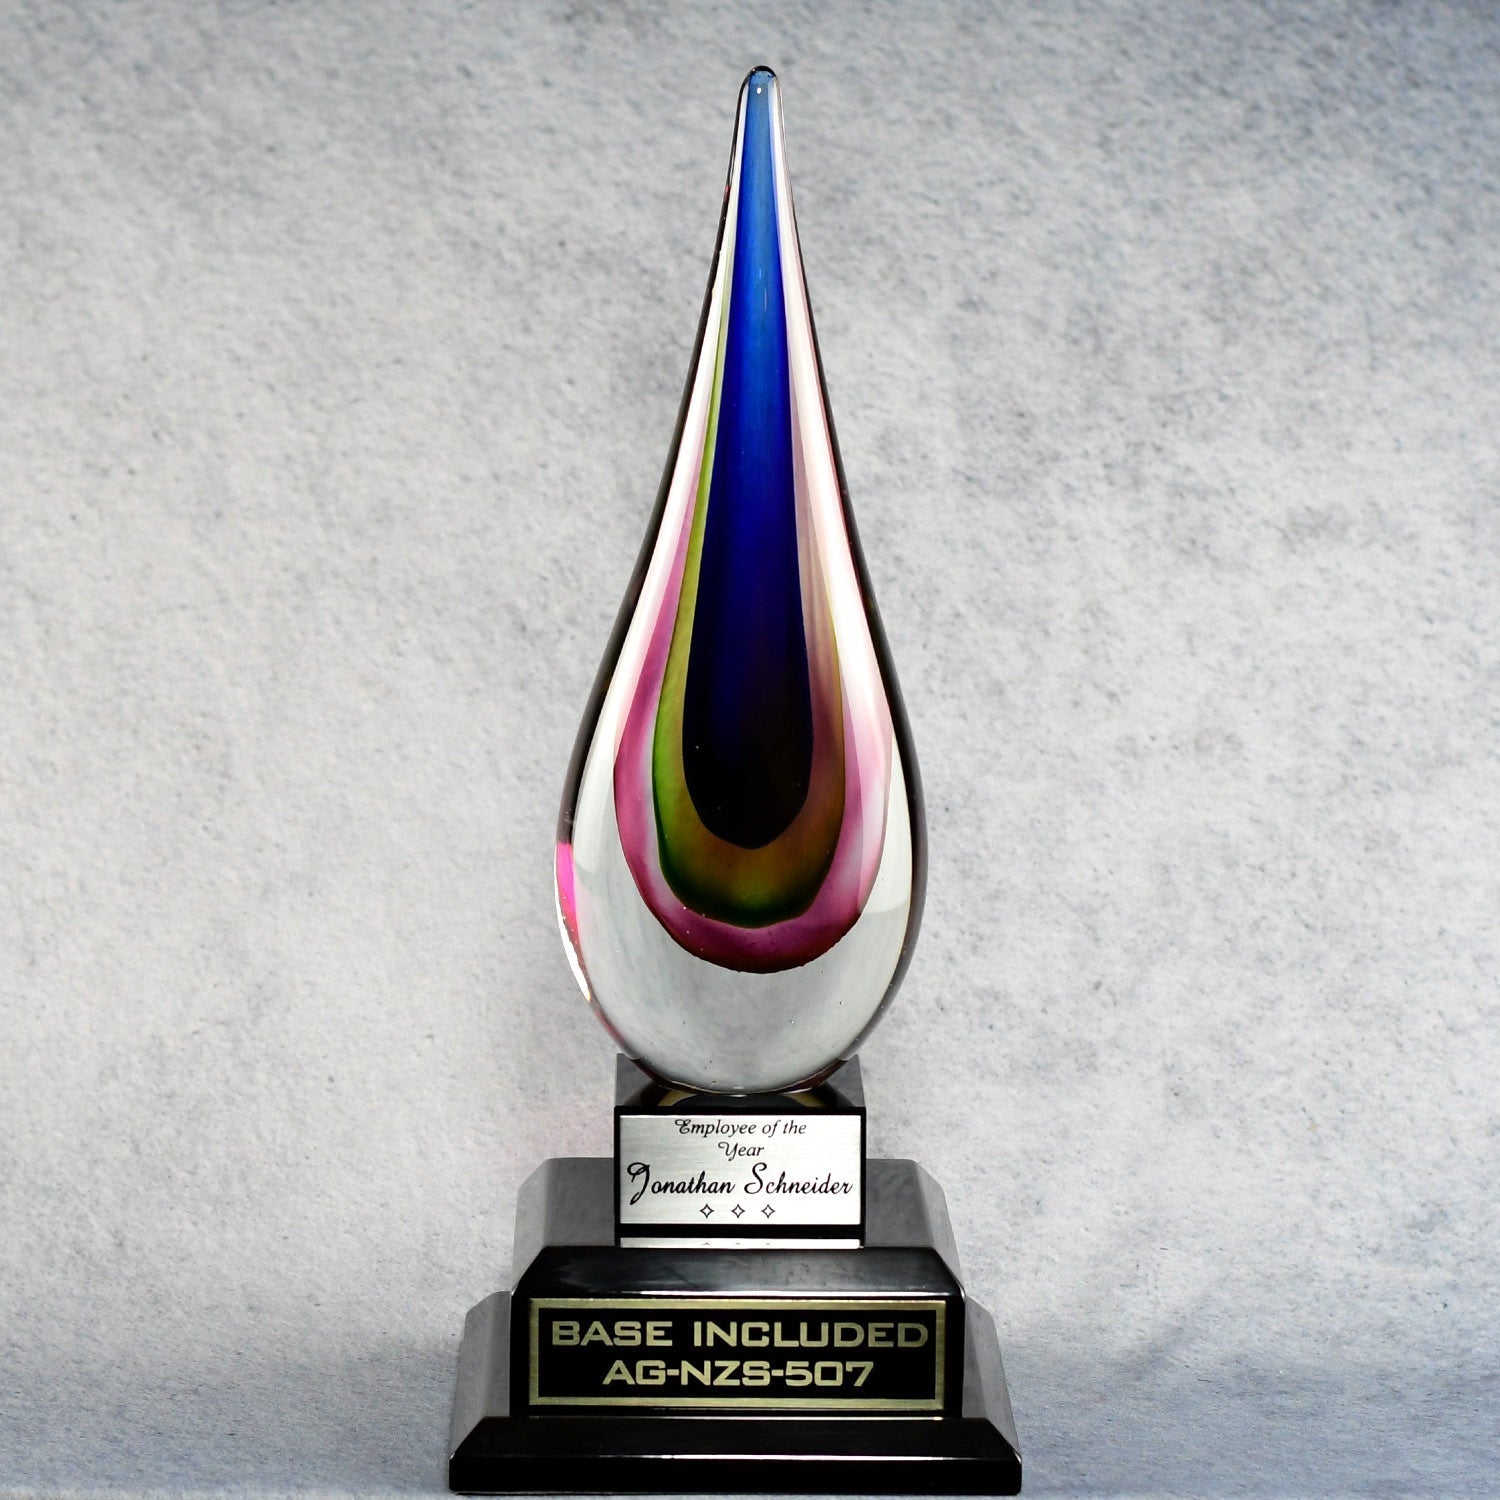 Rainbow Flame Teardrop | Alliance Awards LLC.